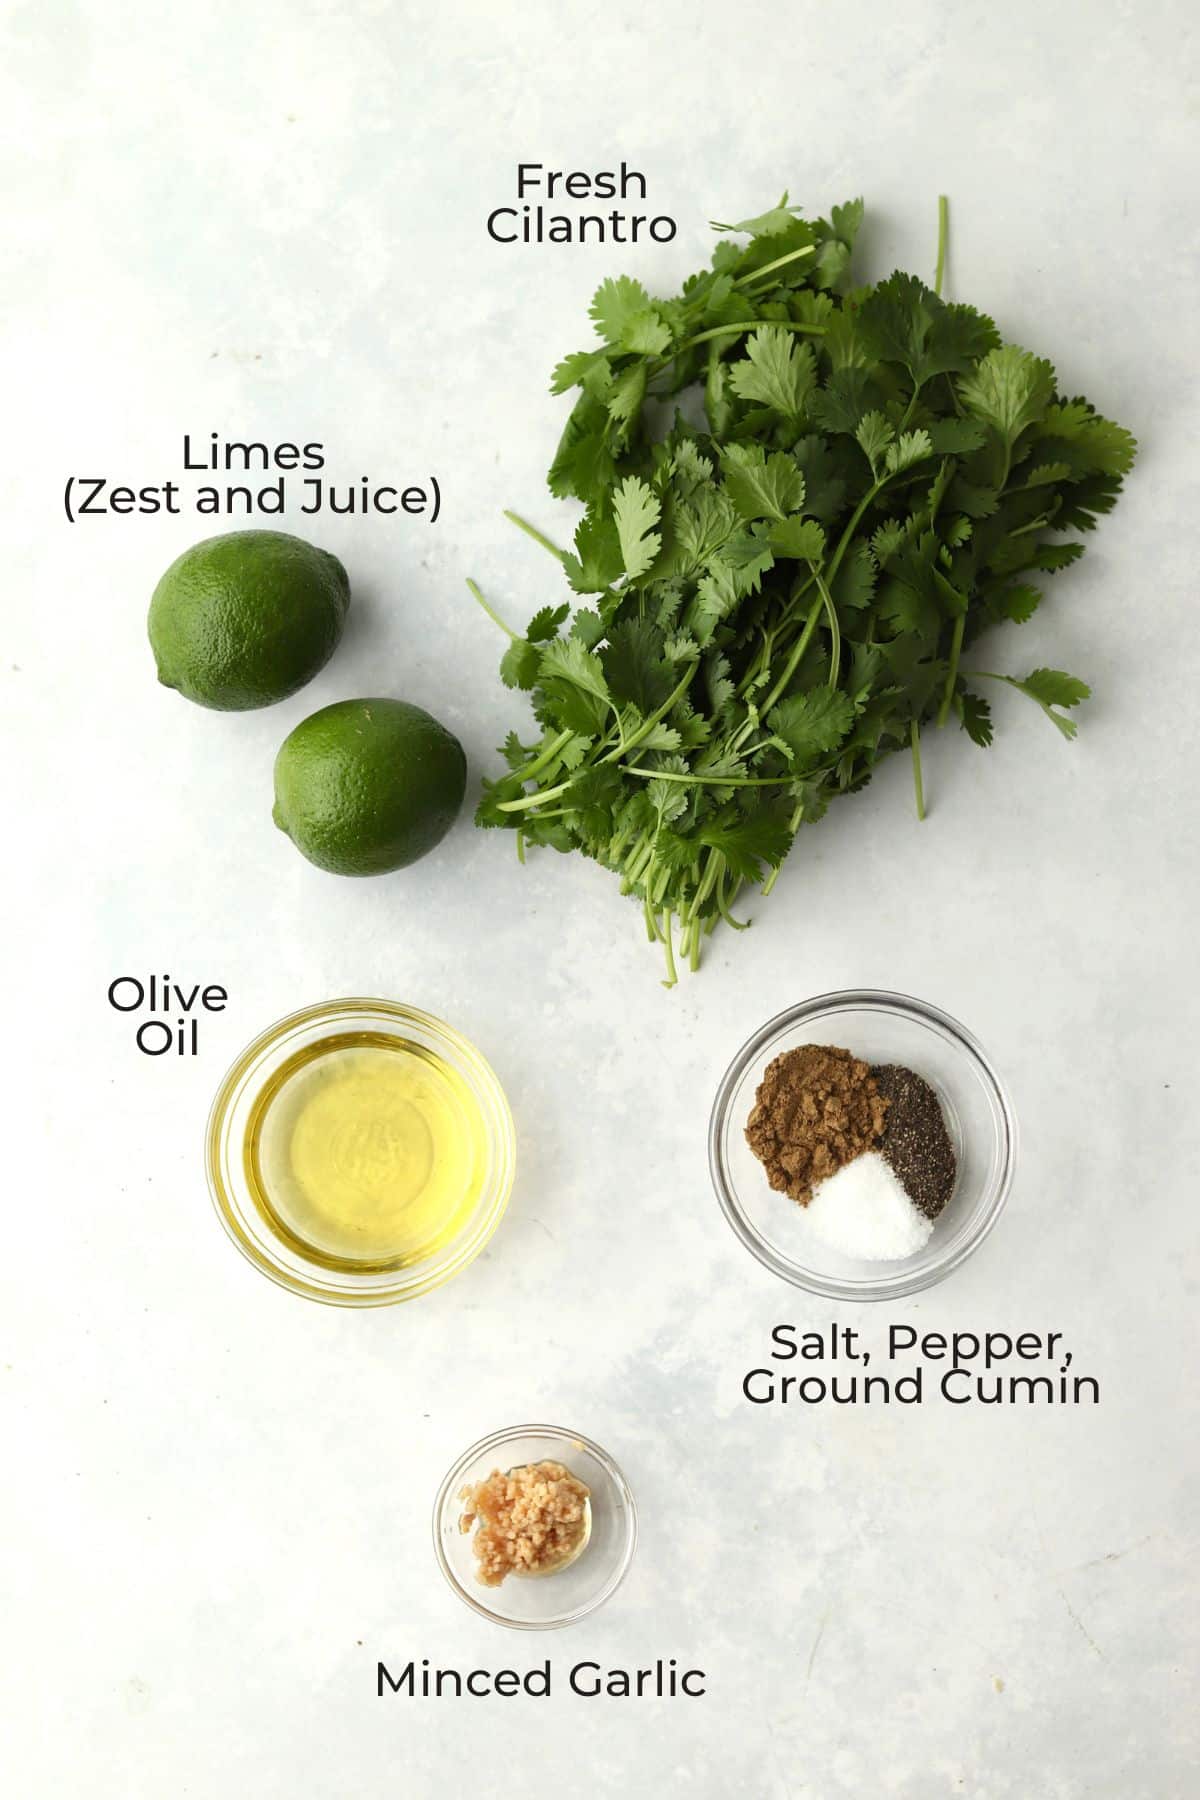 Cilantro, limes, oil, spices, and garlic in prep bowls.